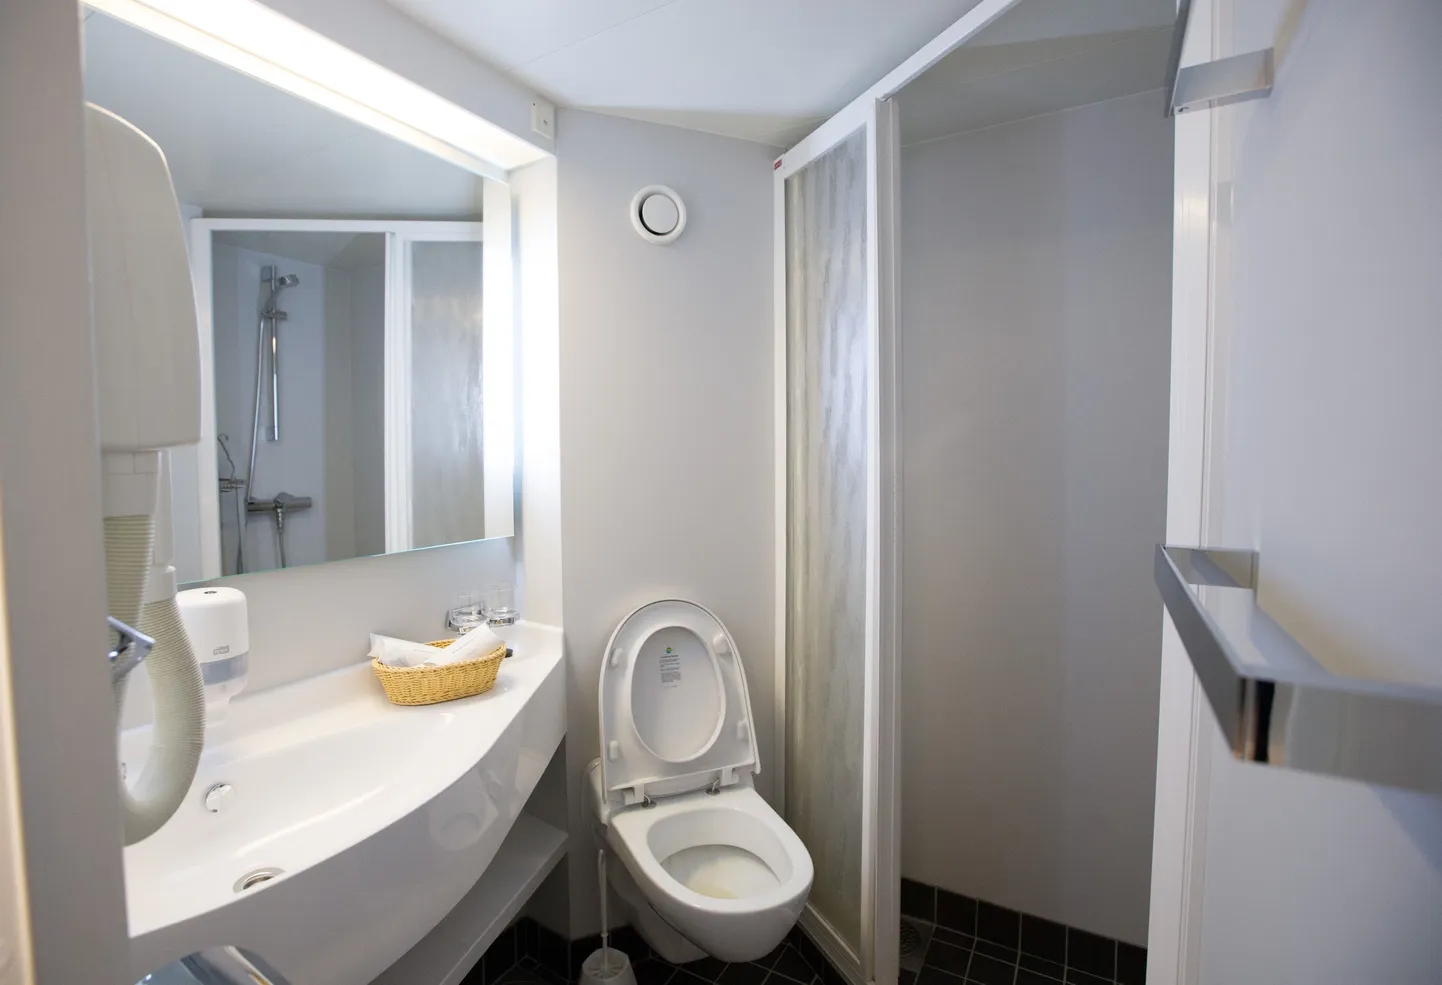 Туалет на пароме Silja Europa. Фото иллюстративное